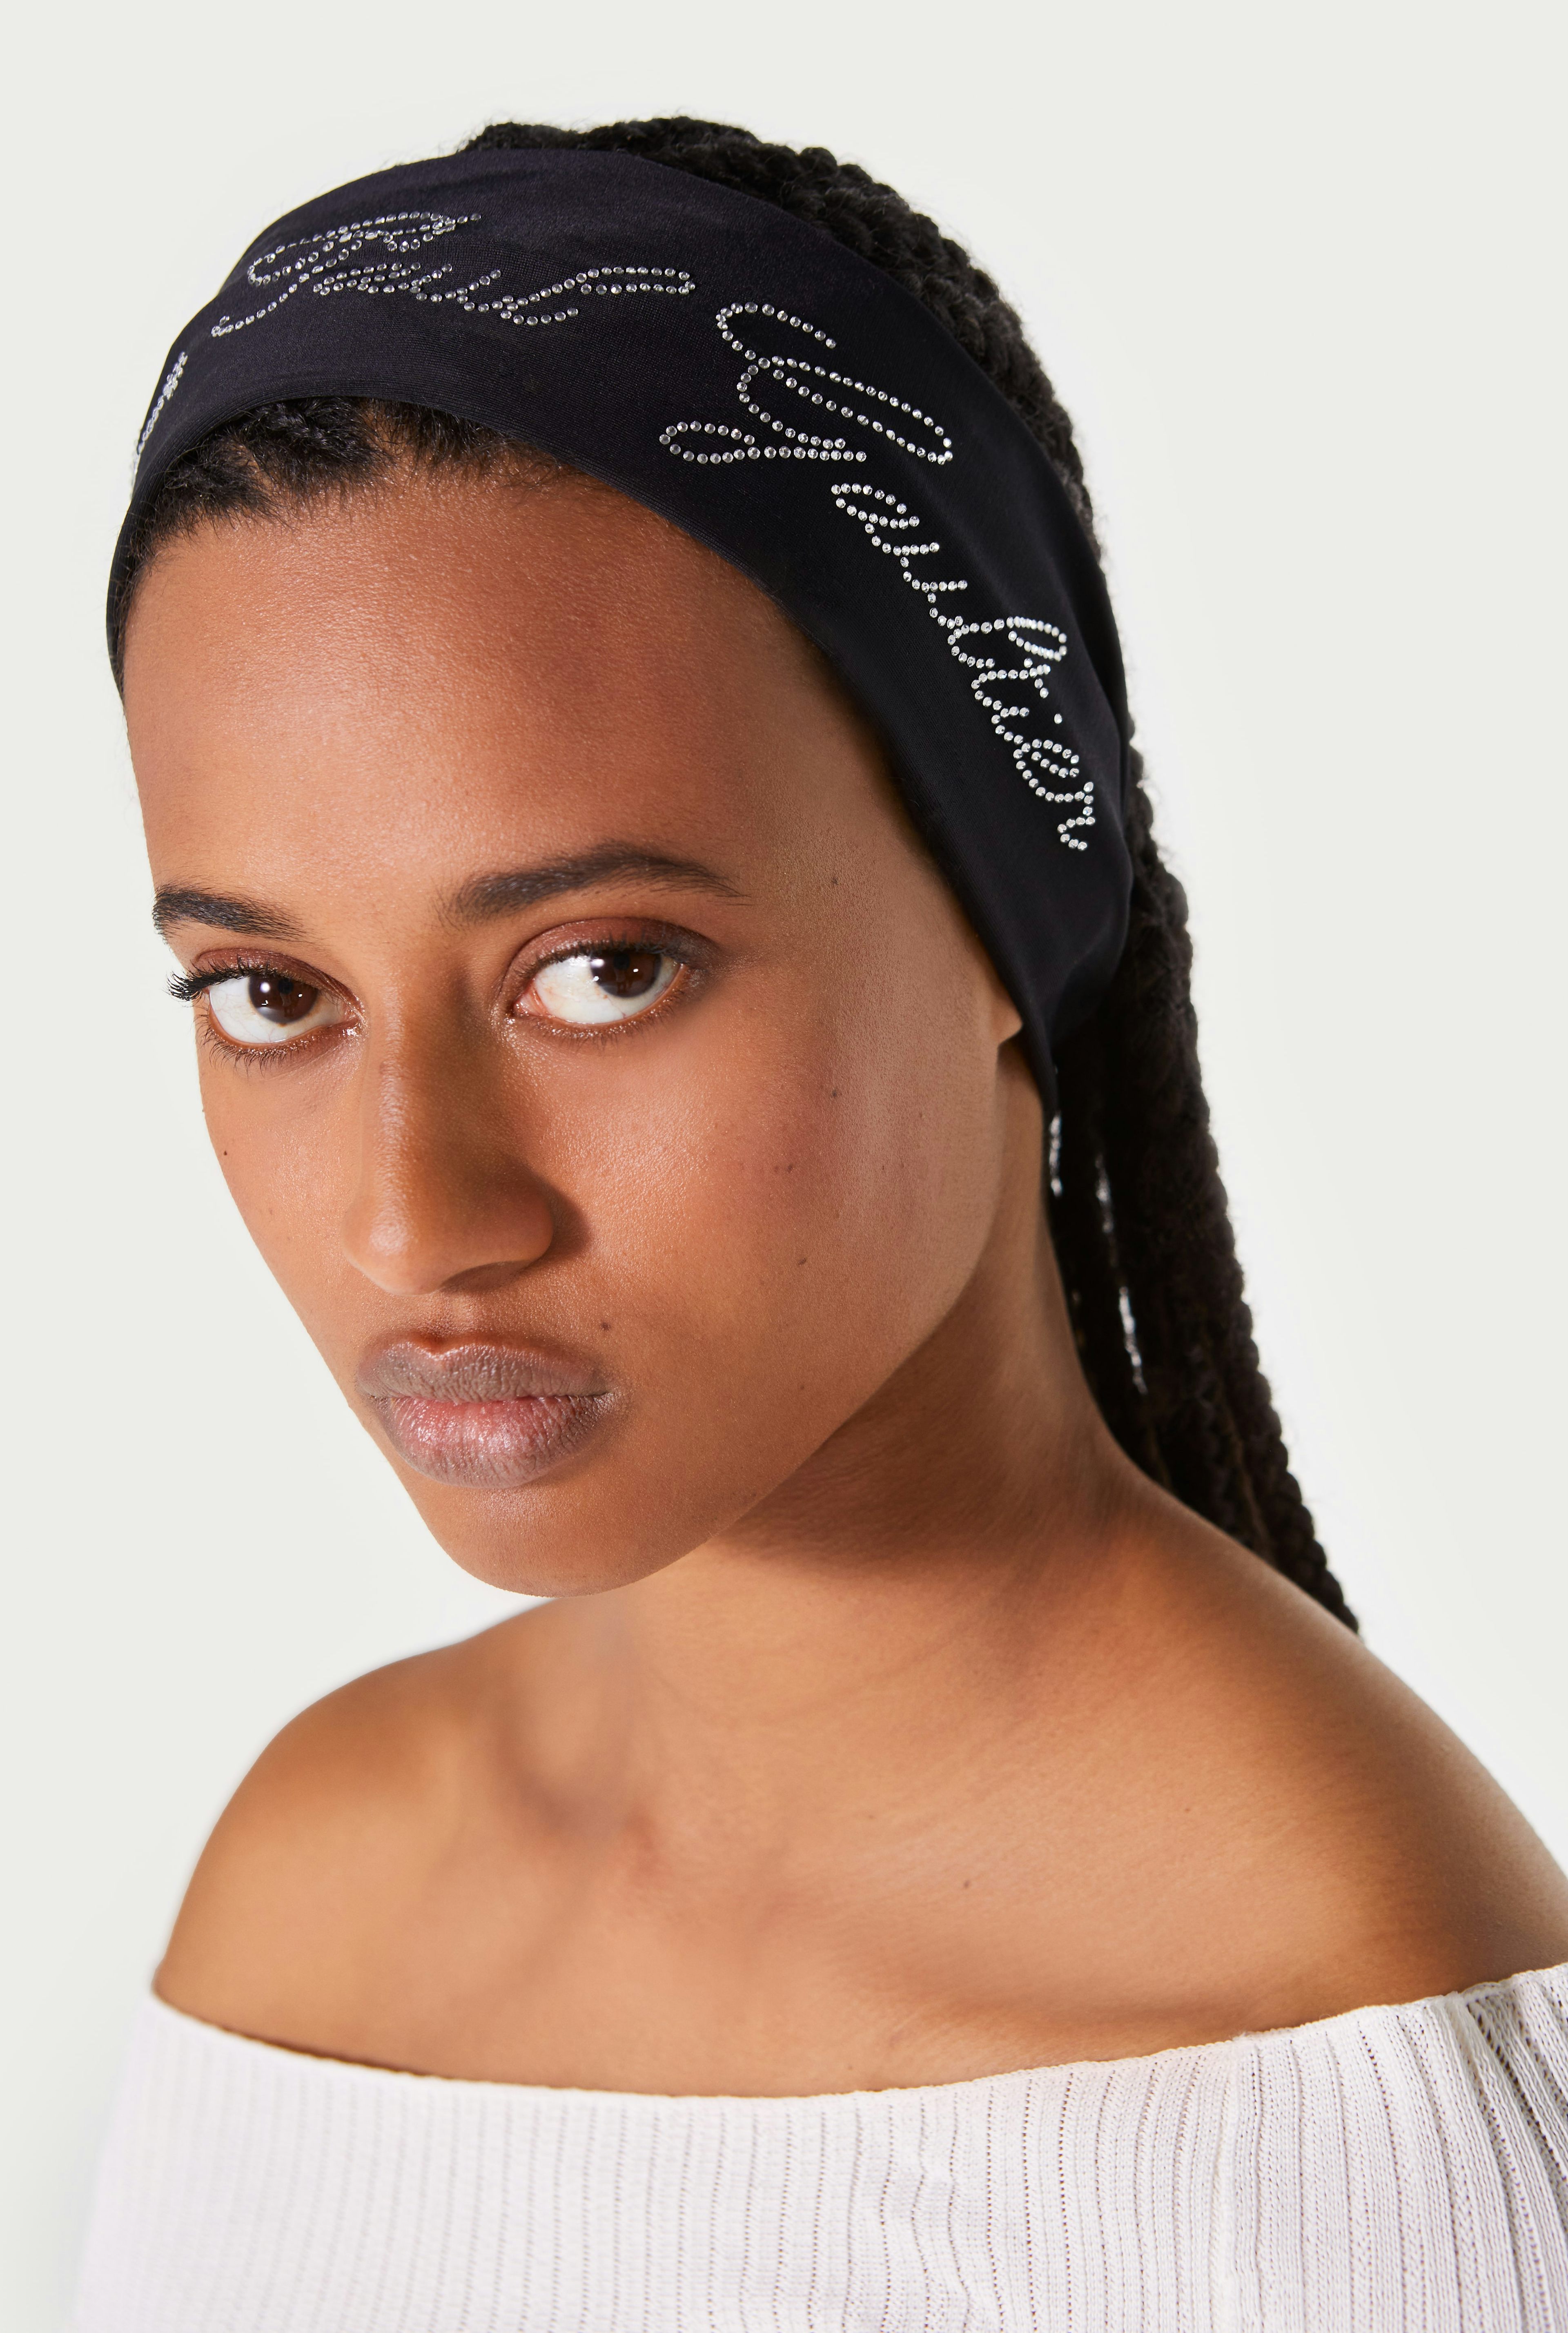 The Black Jean Paul Gaultier Headband